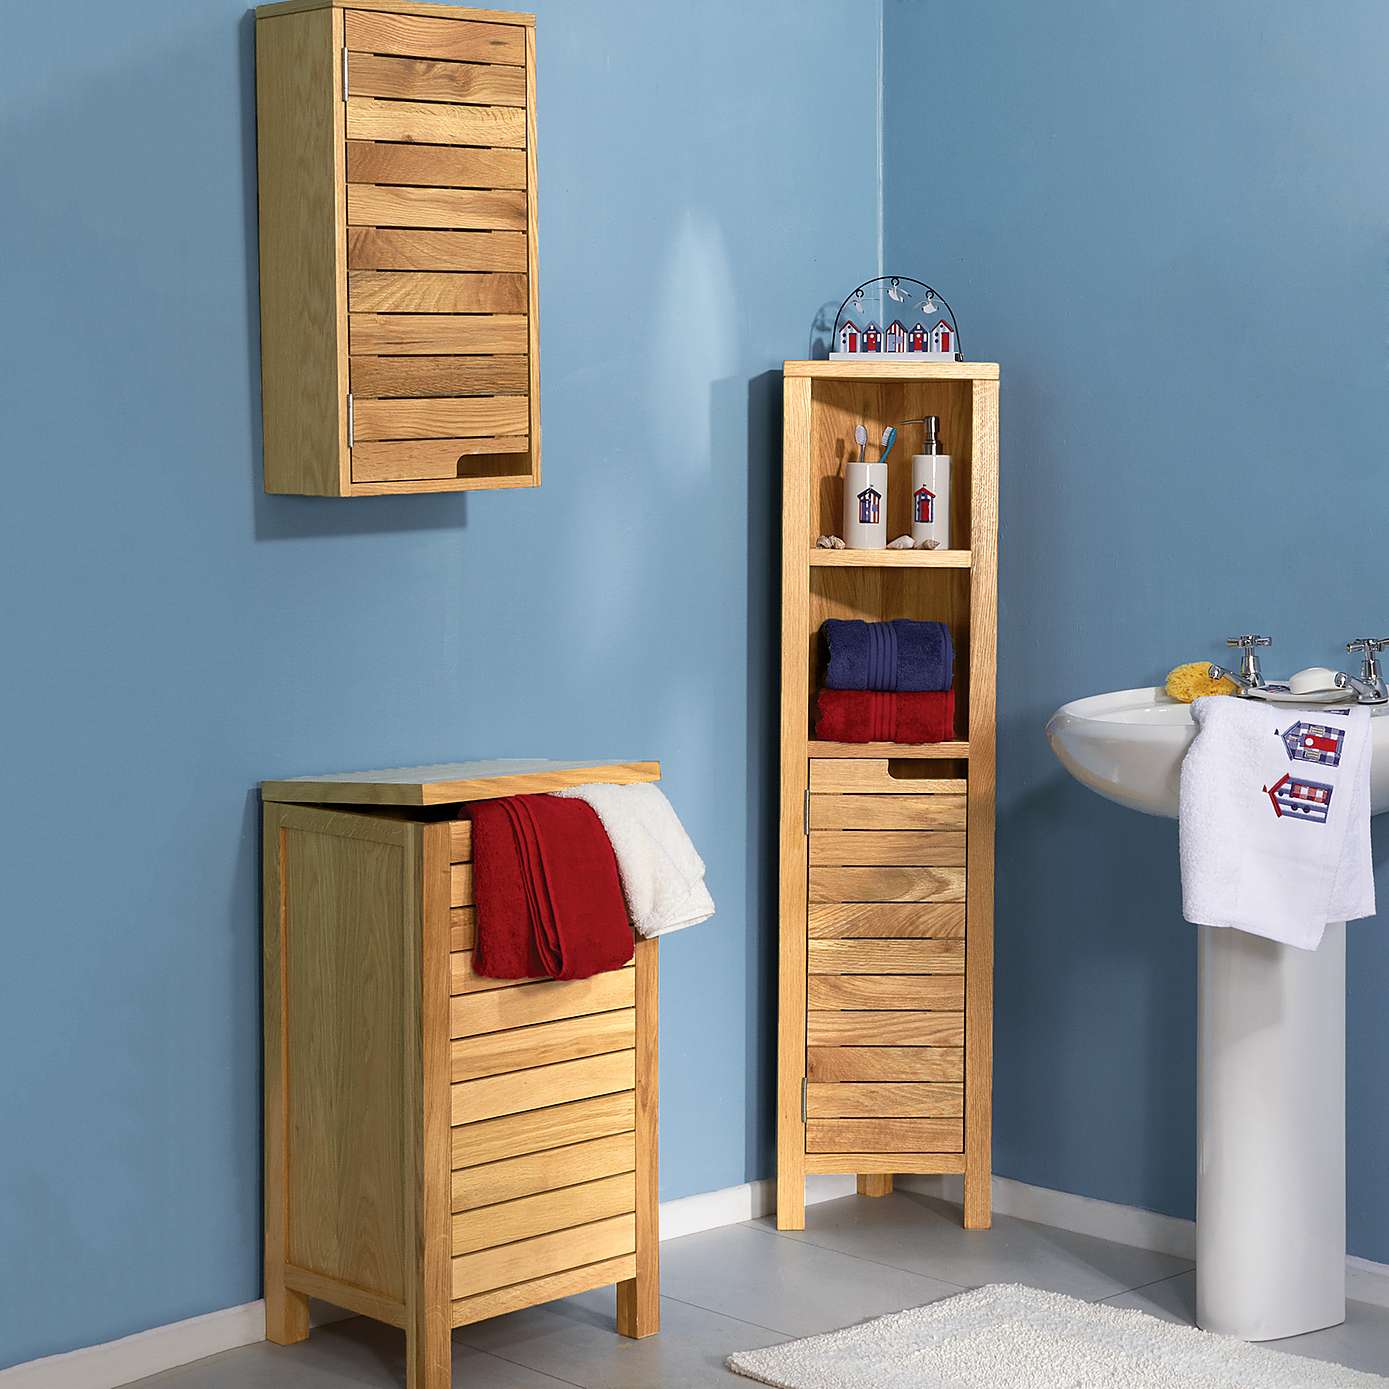 Amazing ... Freestanding Bathroom Furniture ... oak bathroom furniture freestanding